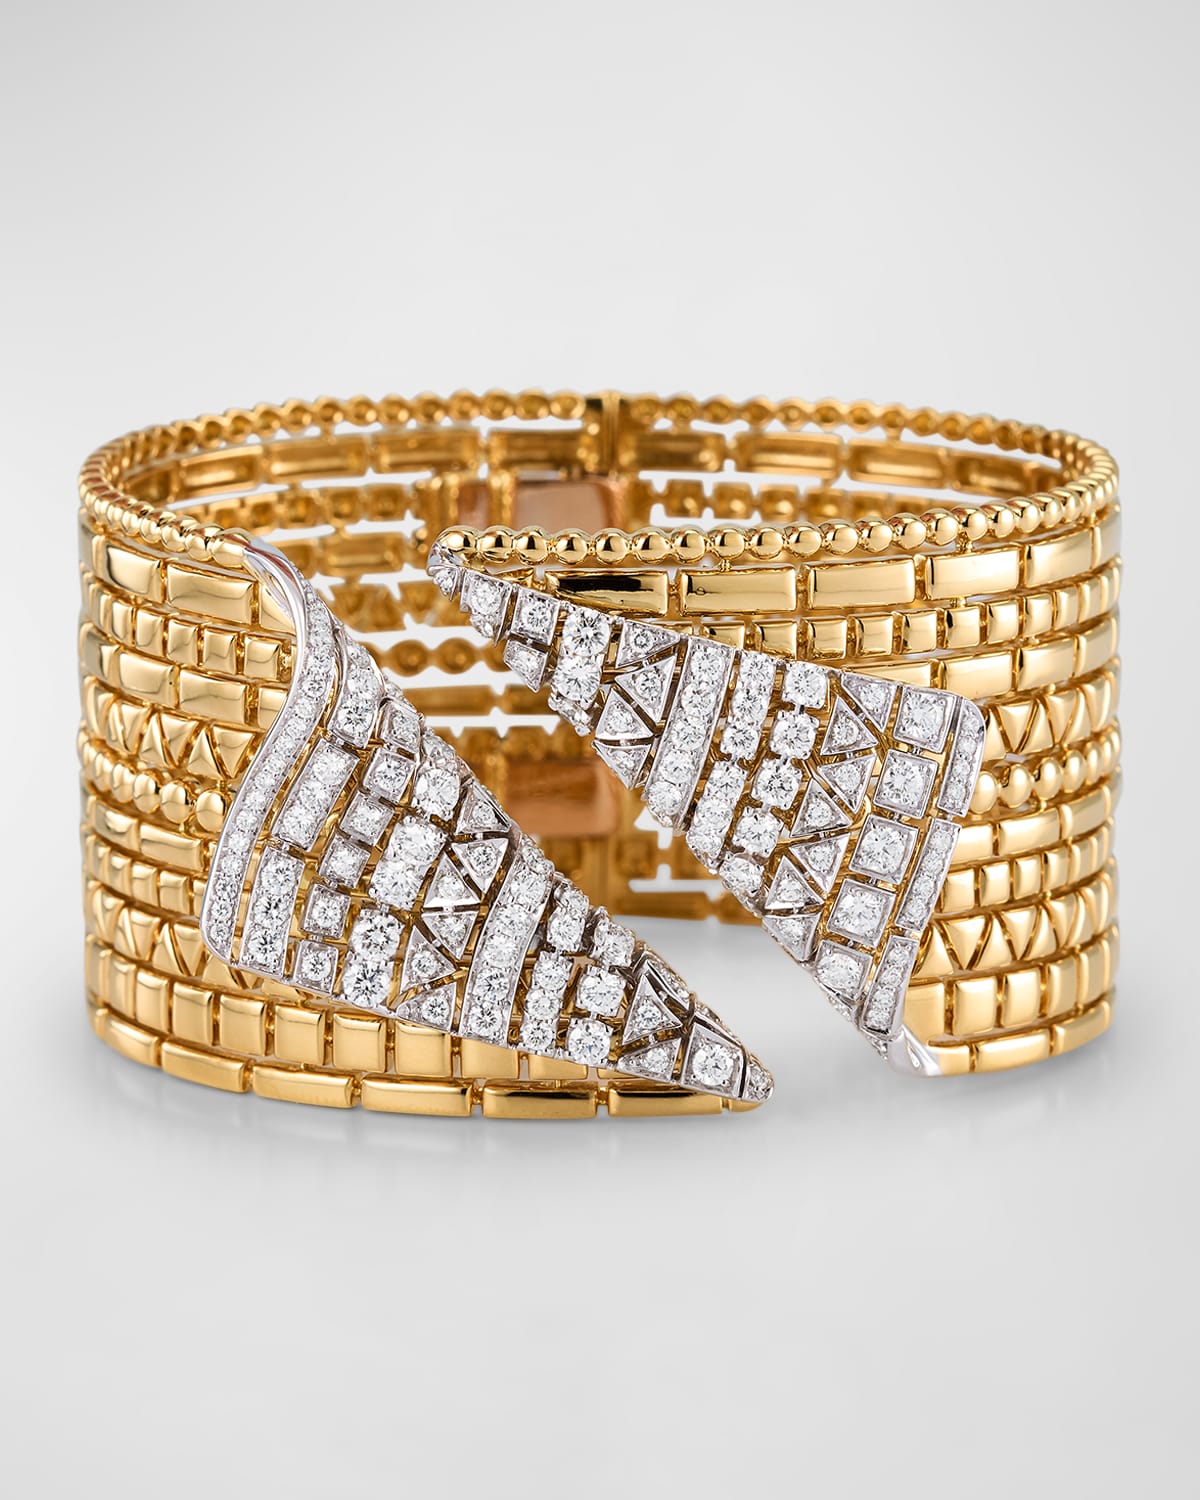 18K Yellow and White Gold Reflexion Cuff Bracelet with Diamonds